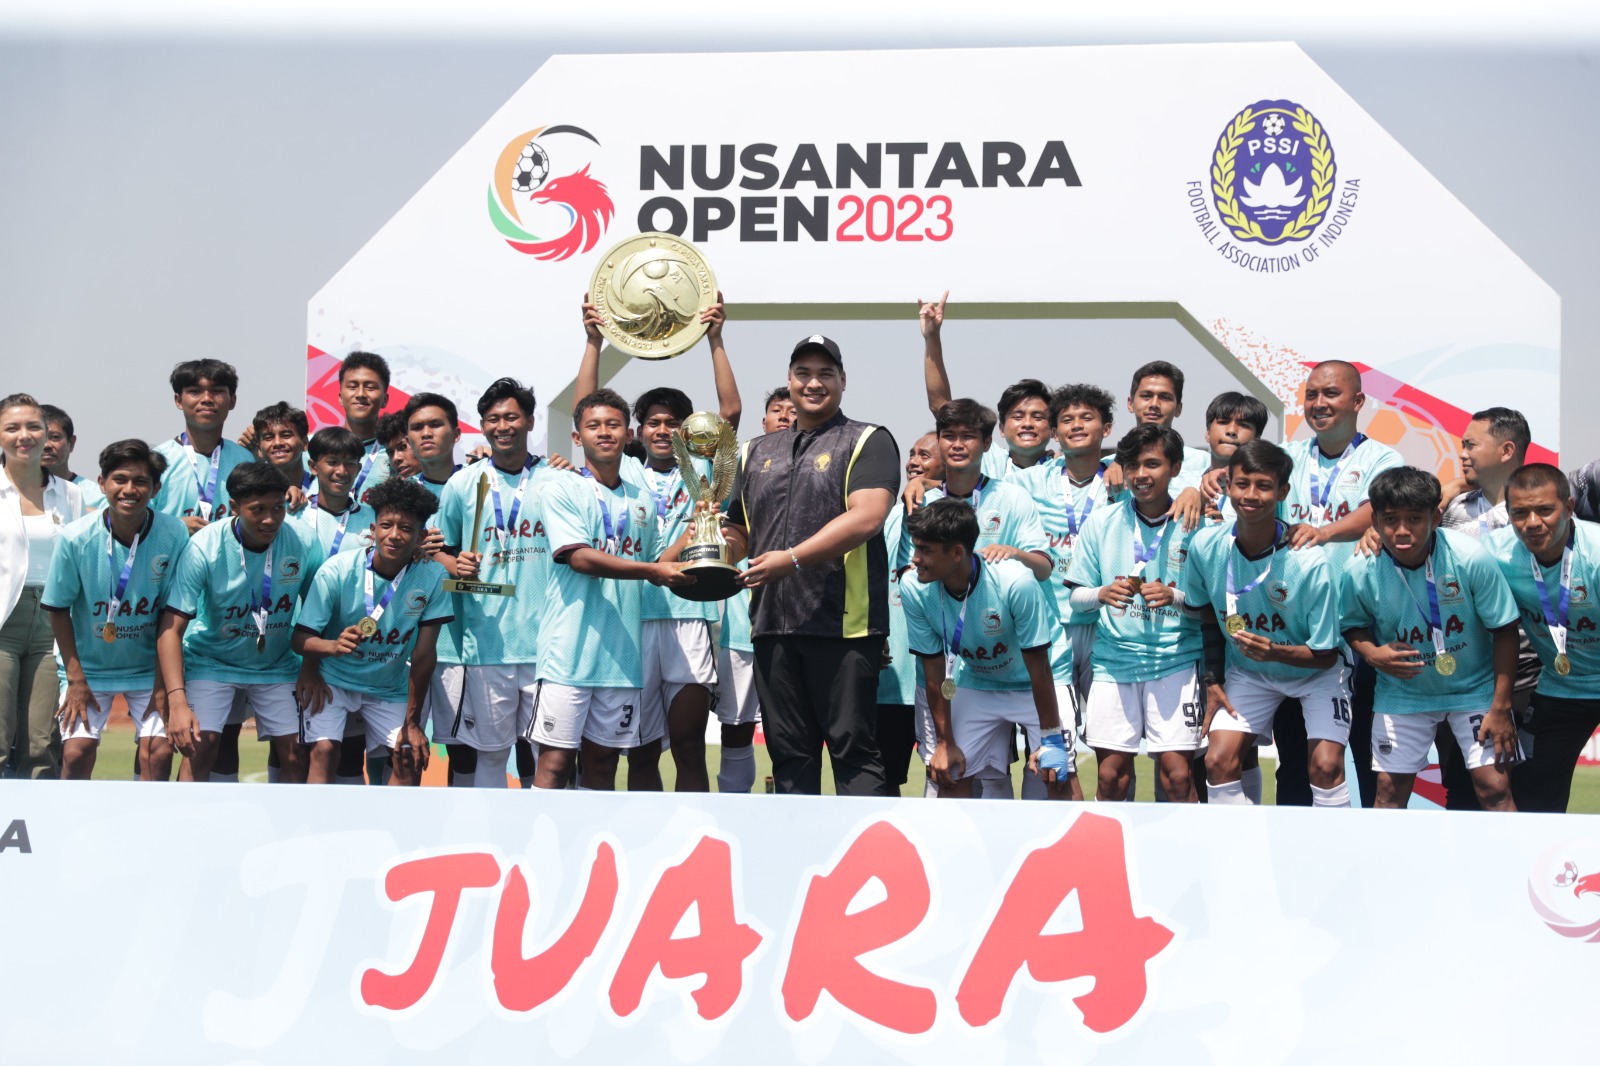 Menpora Dito Apresiasi Nusantara Open 2023 Sebagai Ajang Pembinaan Atlet Sepak Bola